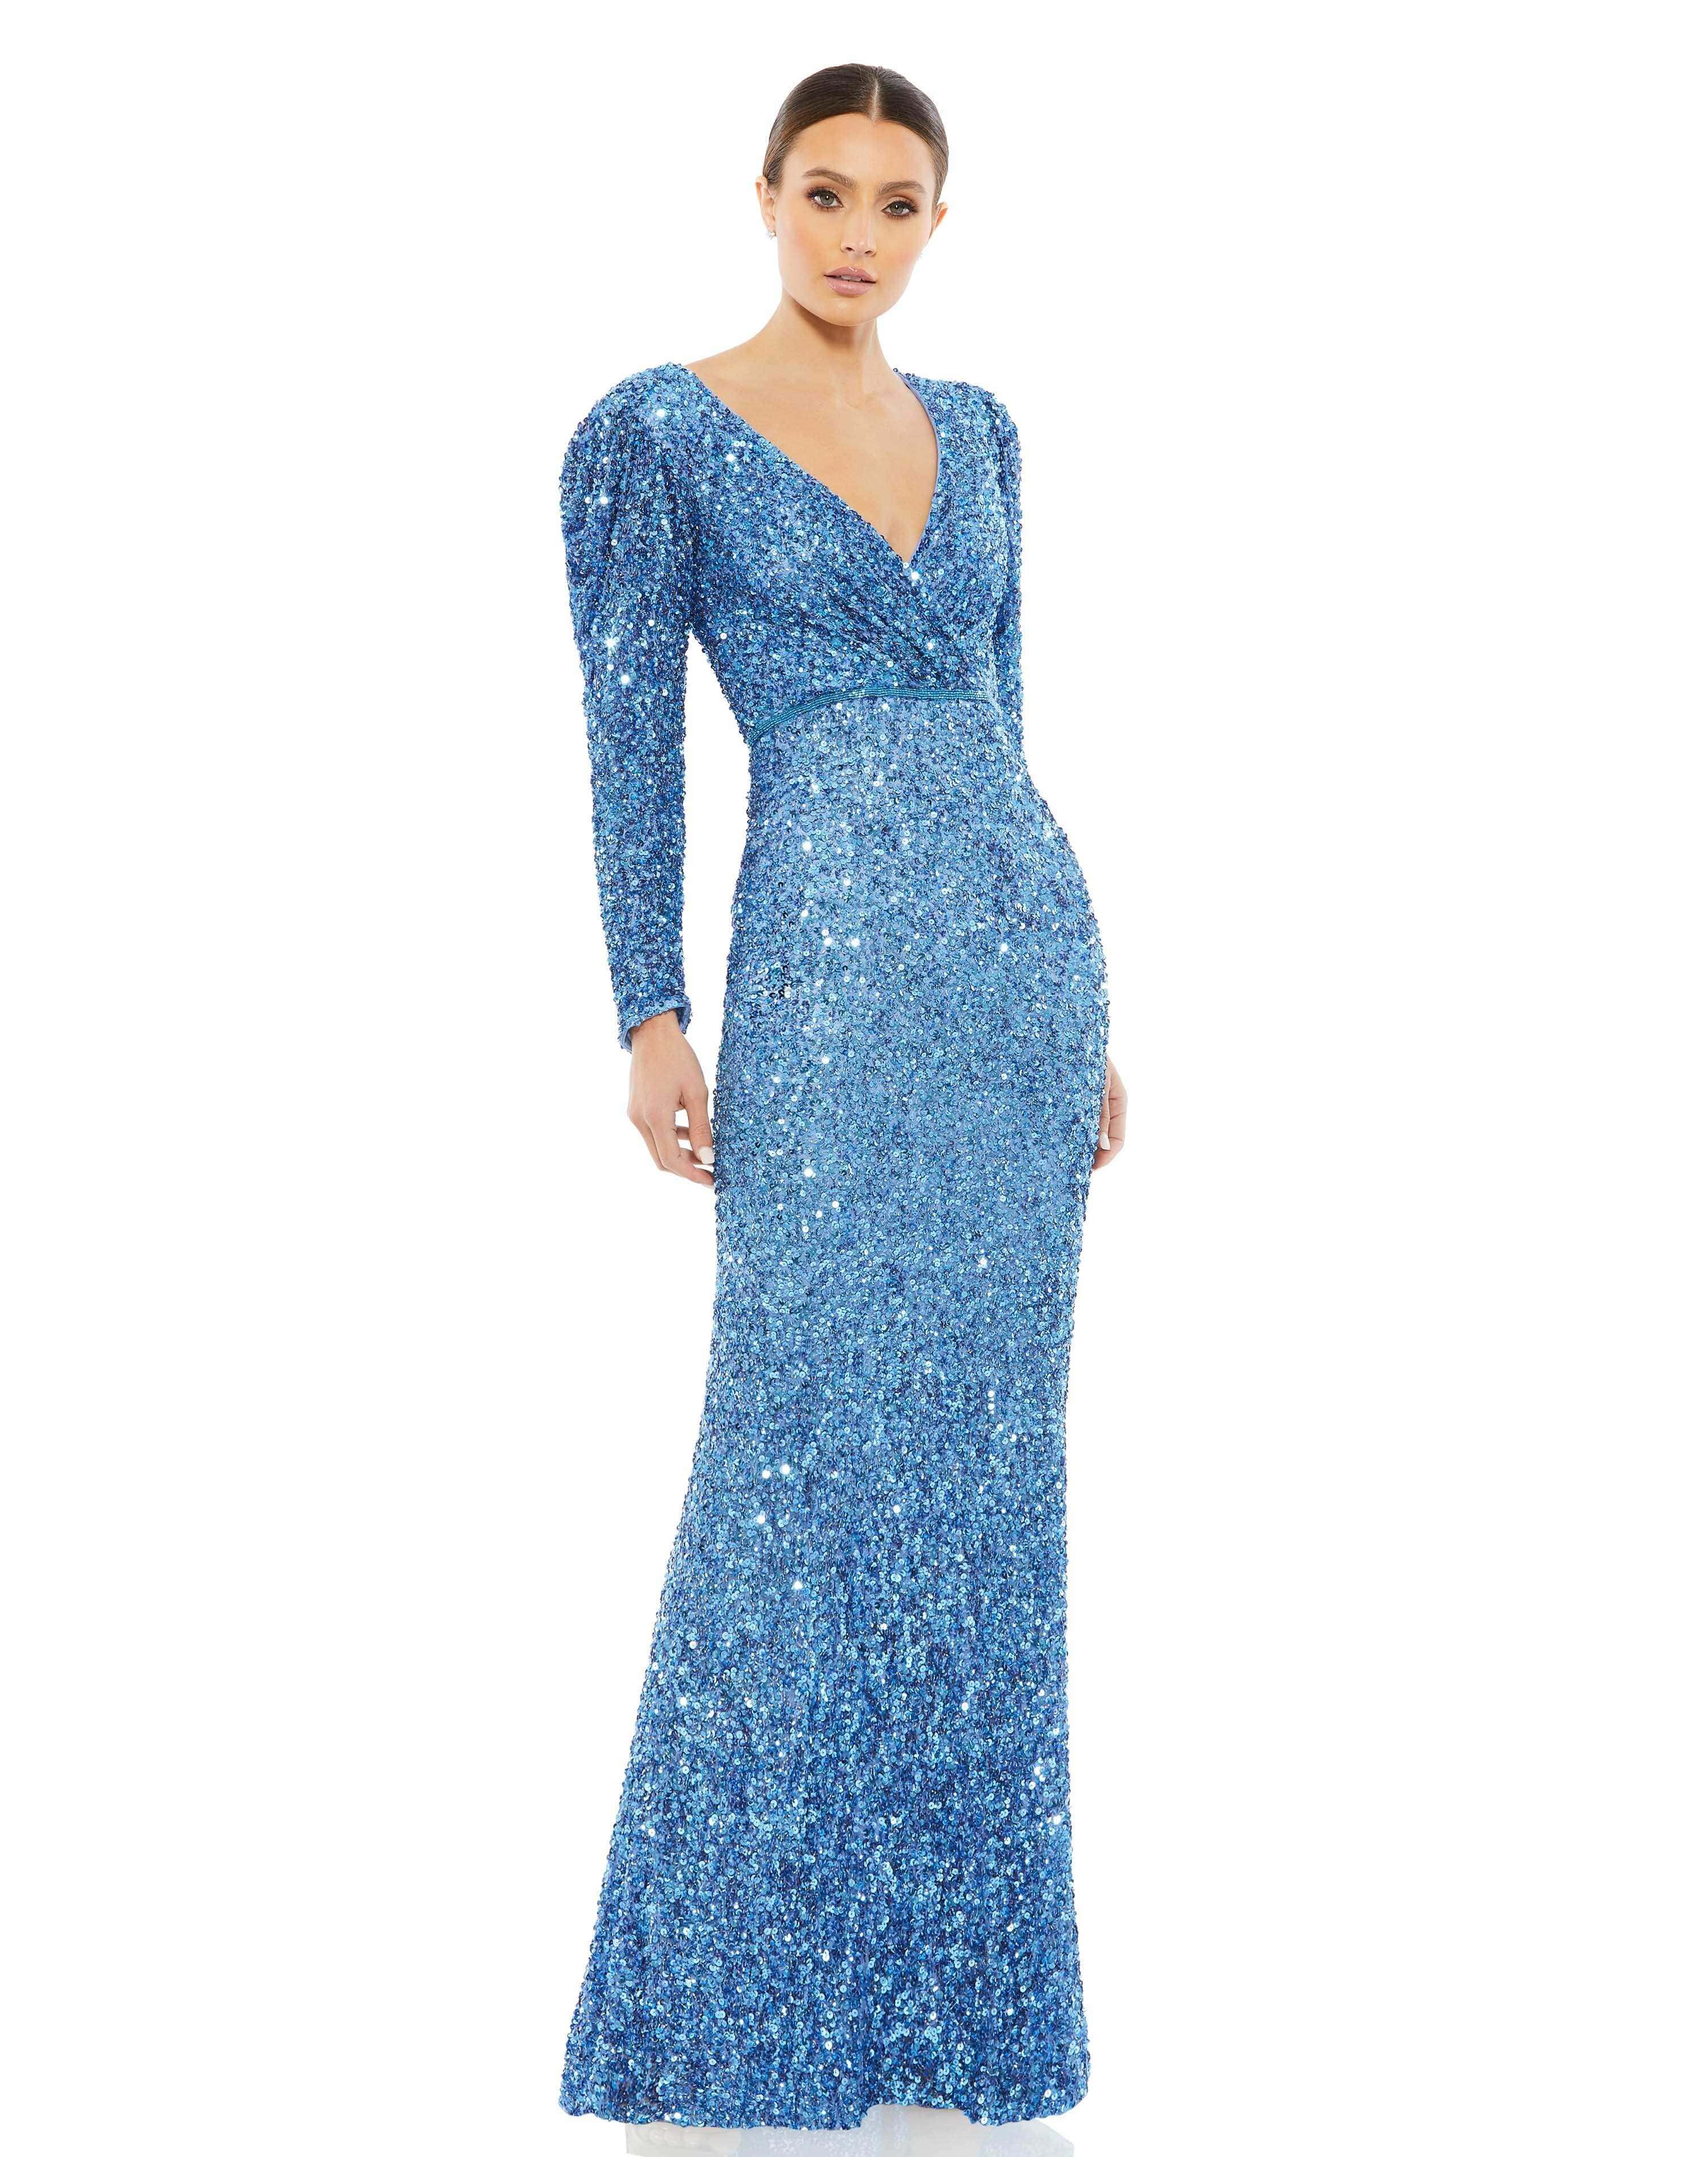 Marfil Barcelona 7J225 Sequined Blue Evening Gown HK  DBR Weddings